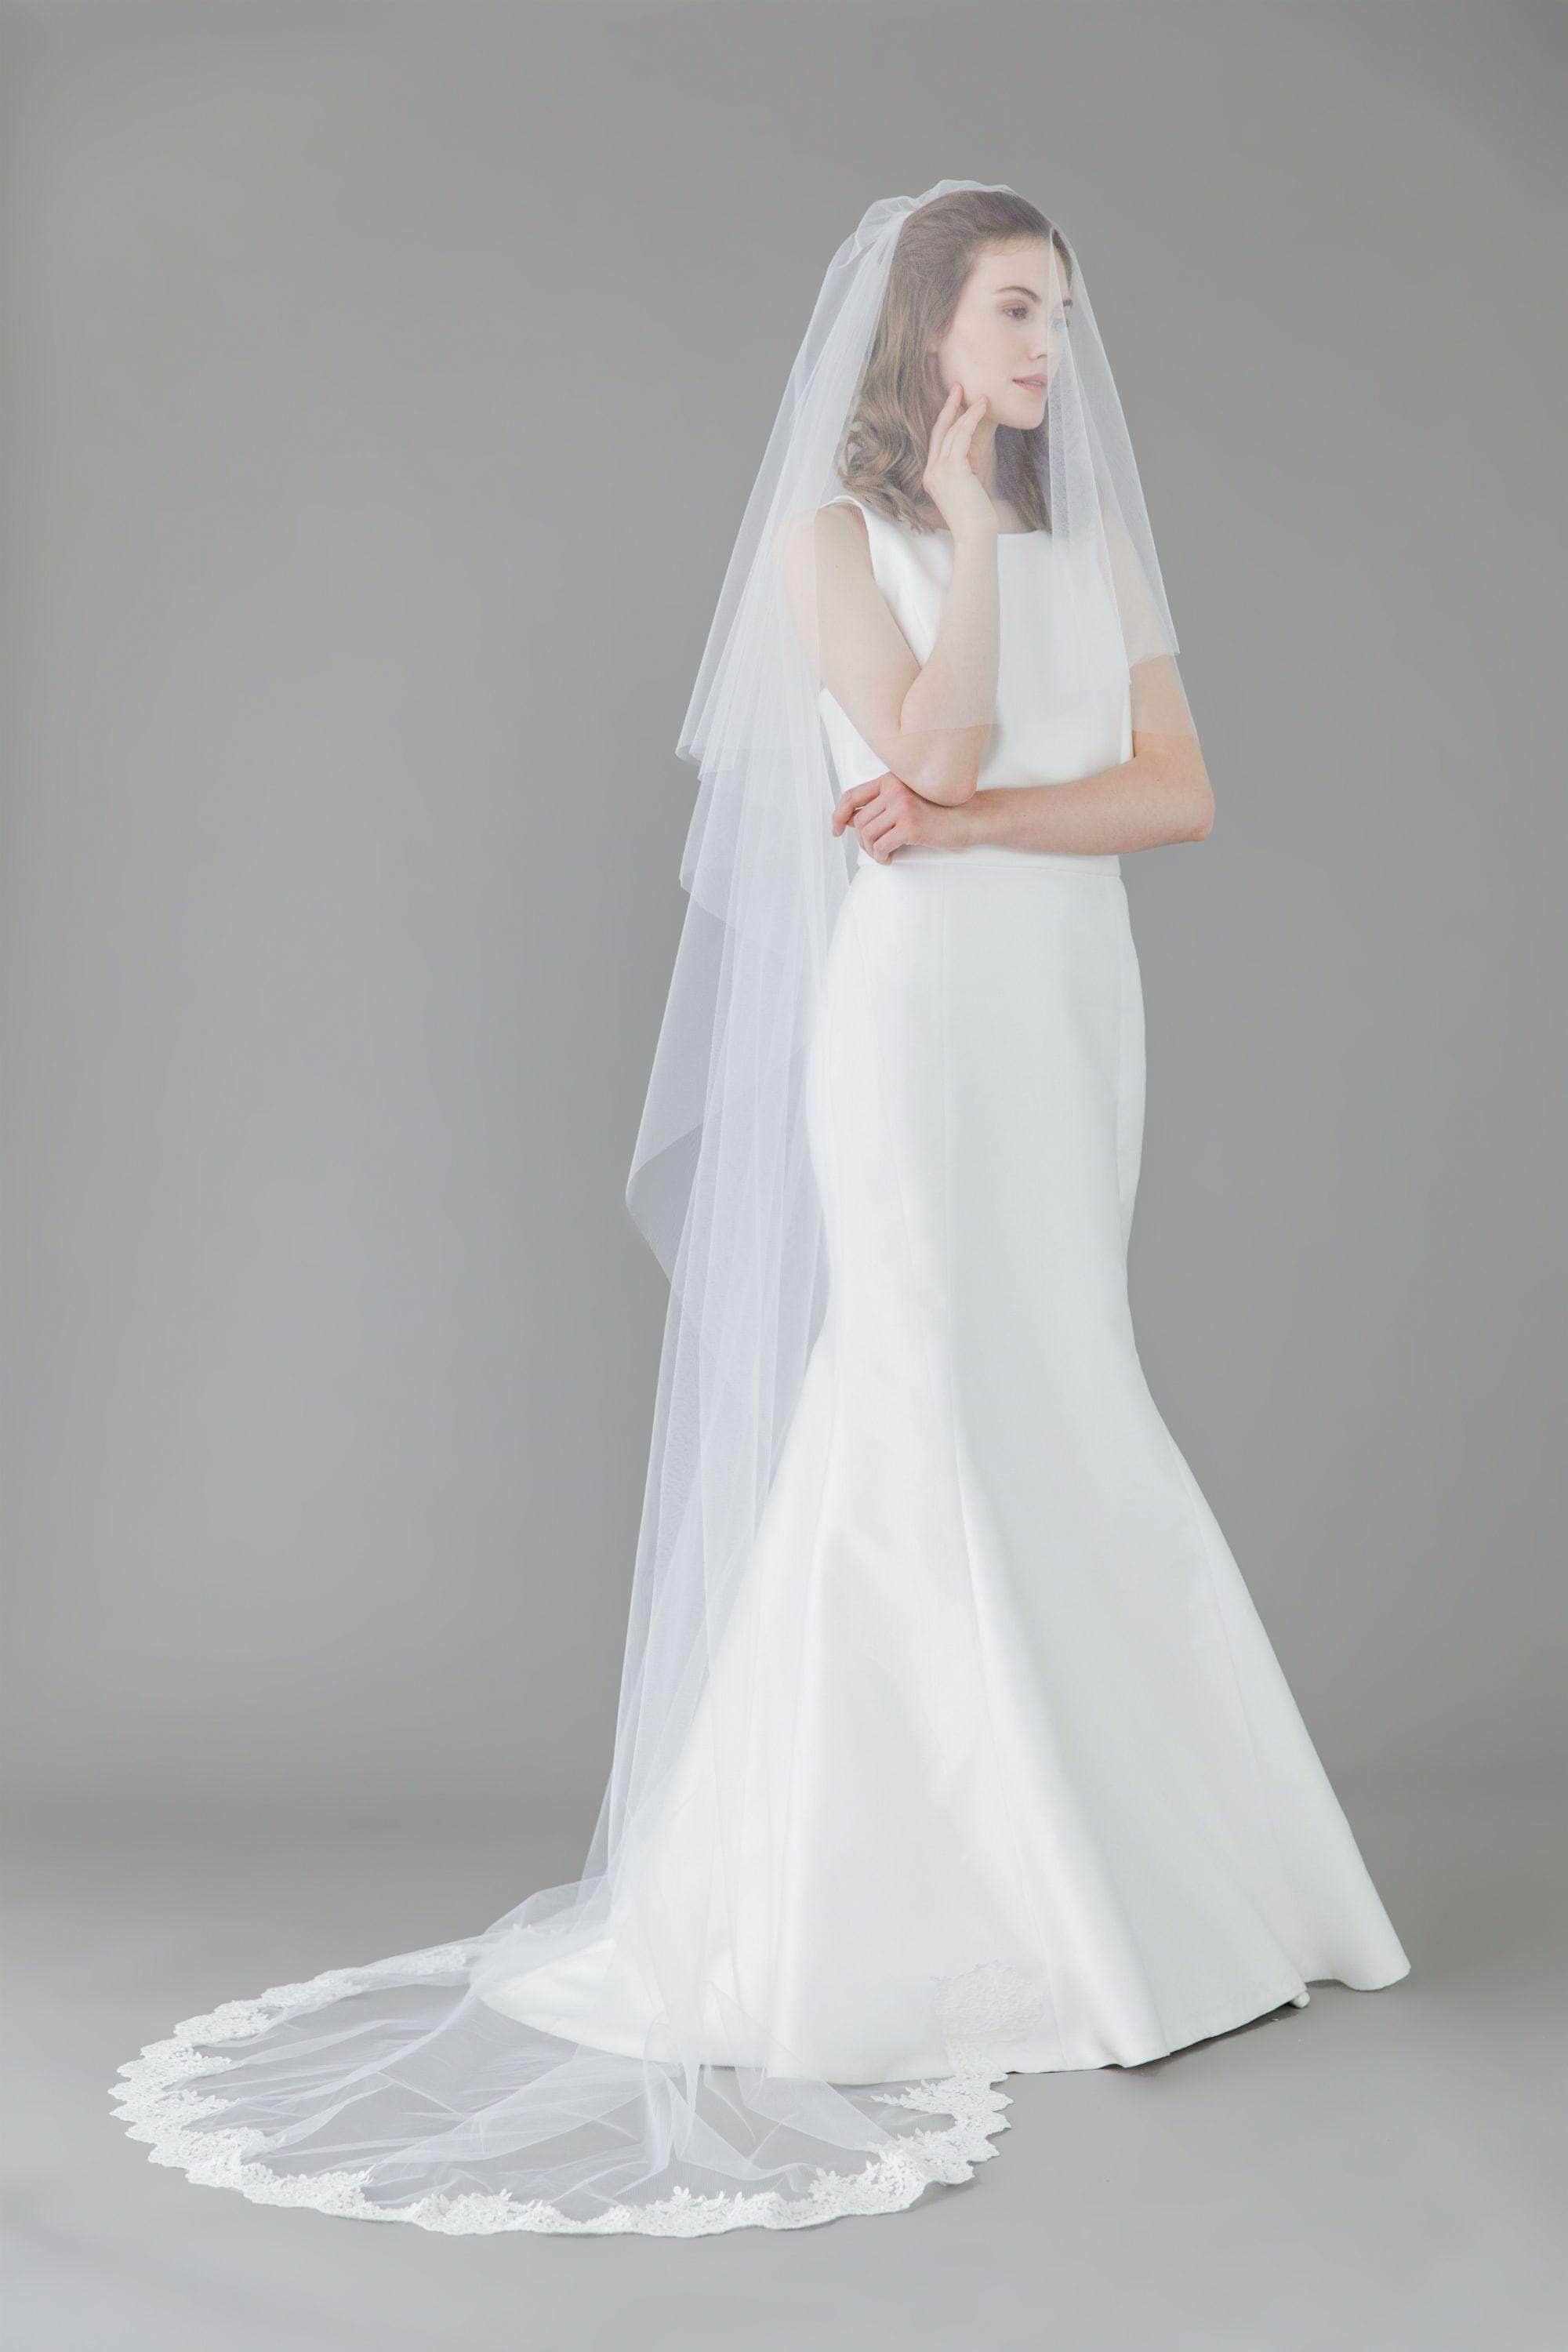 lace ivory wedding veil